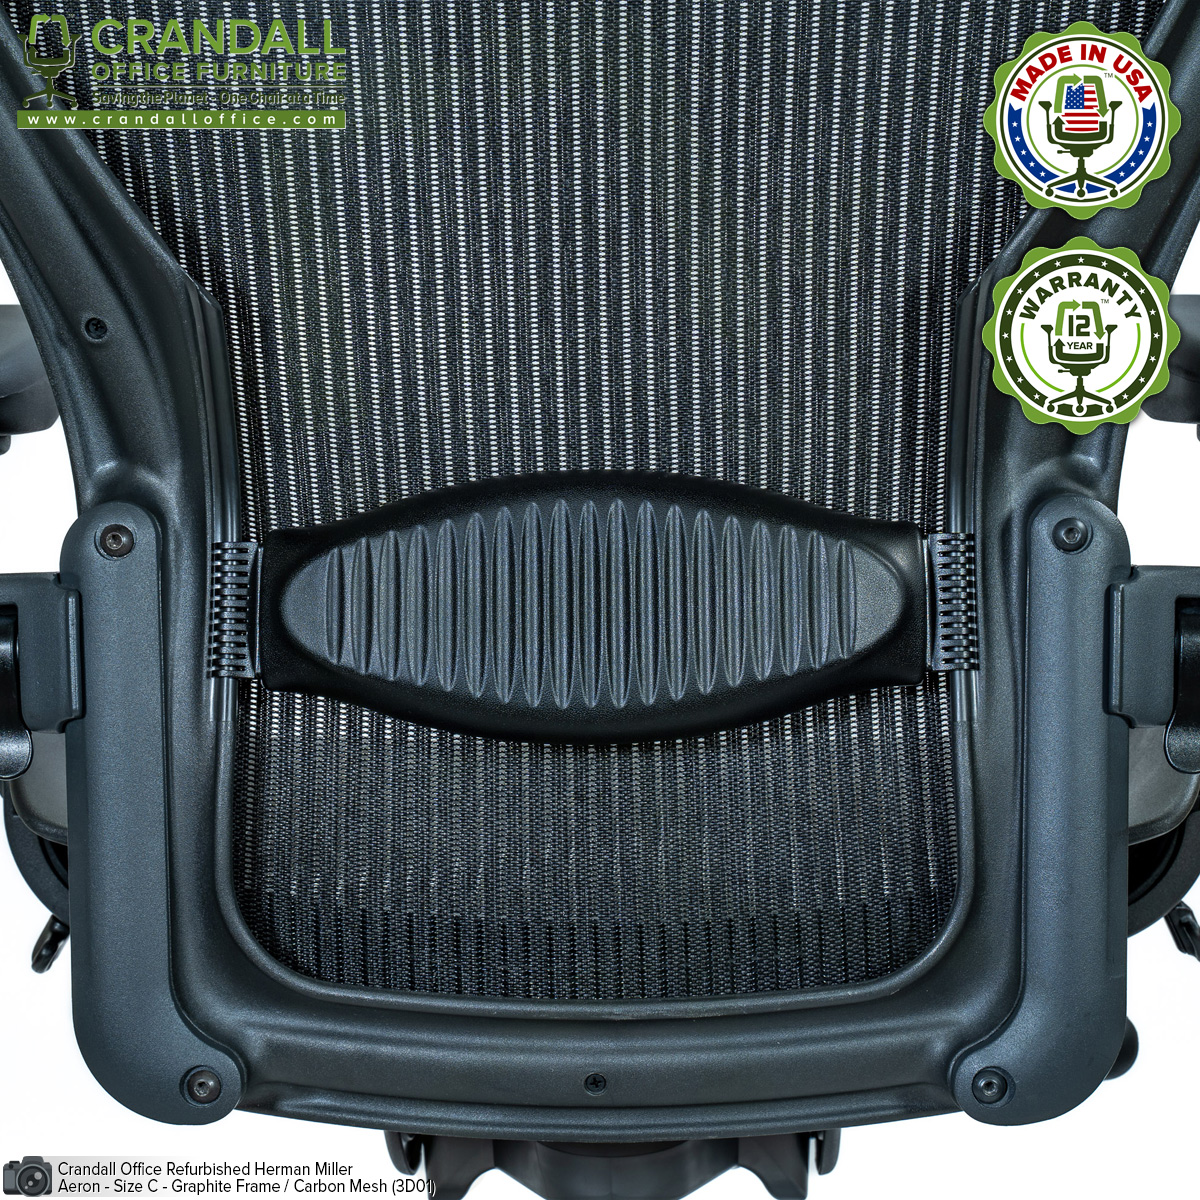 Refurbished Herman Miller Aeron Chair - Size B - 2 Year Warranty